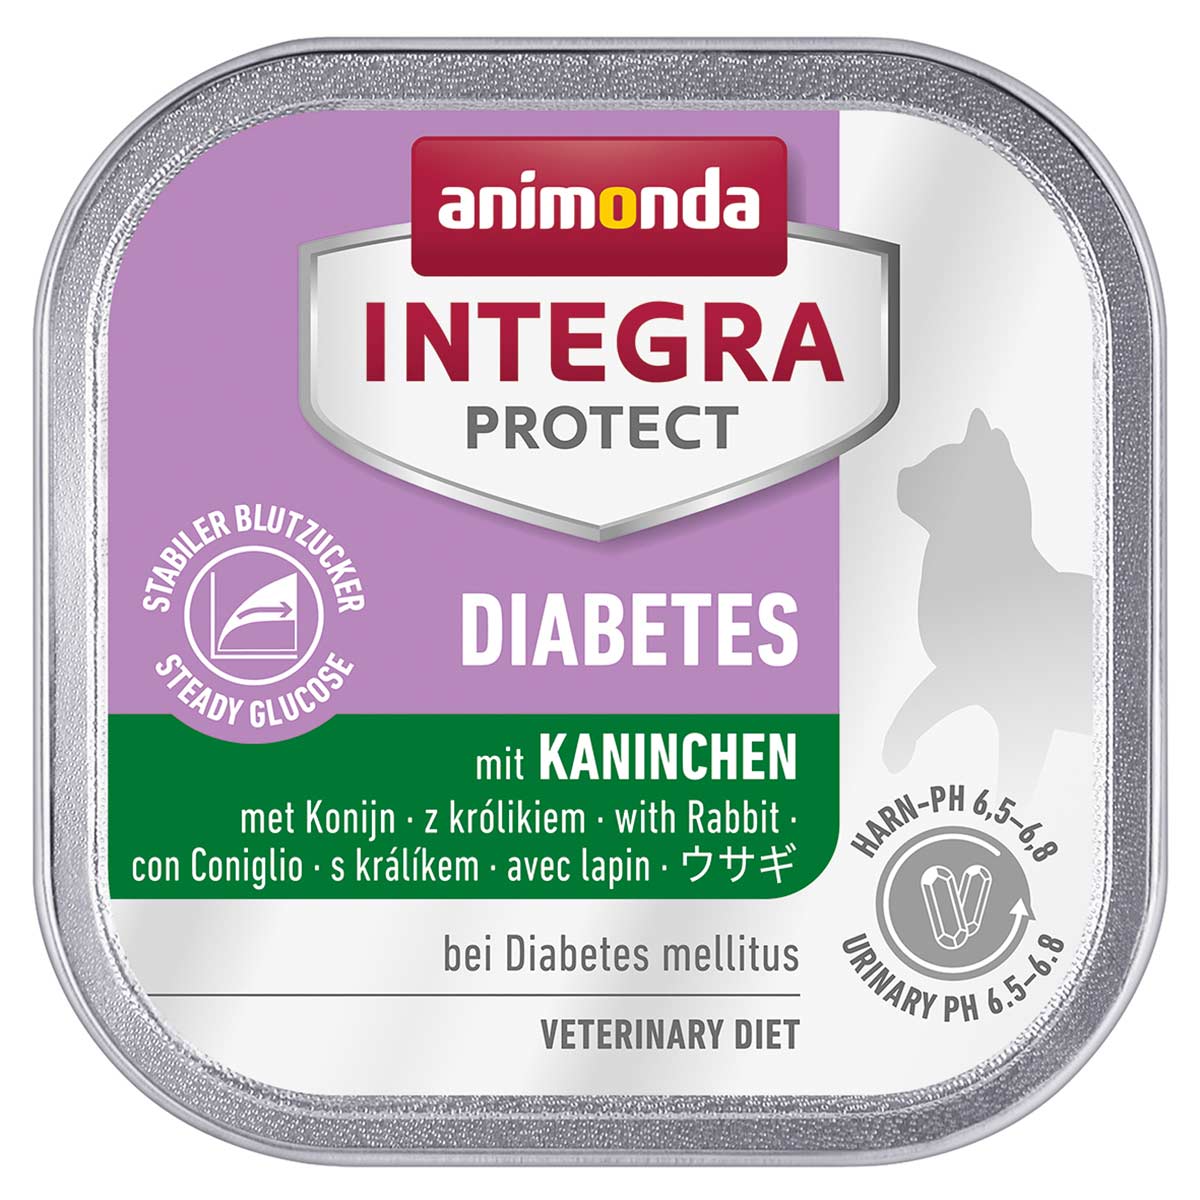 animonda IINTEGRA PROTECT Diabetes mit Kaninchen 6x100g von animonda Integra Protect